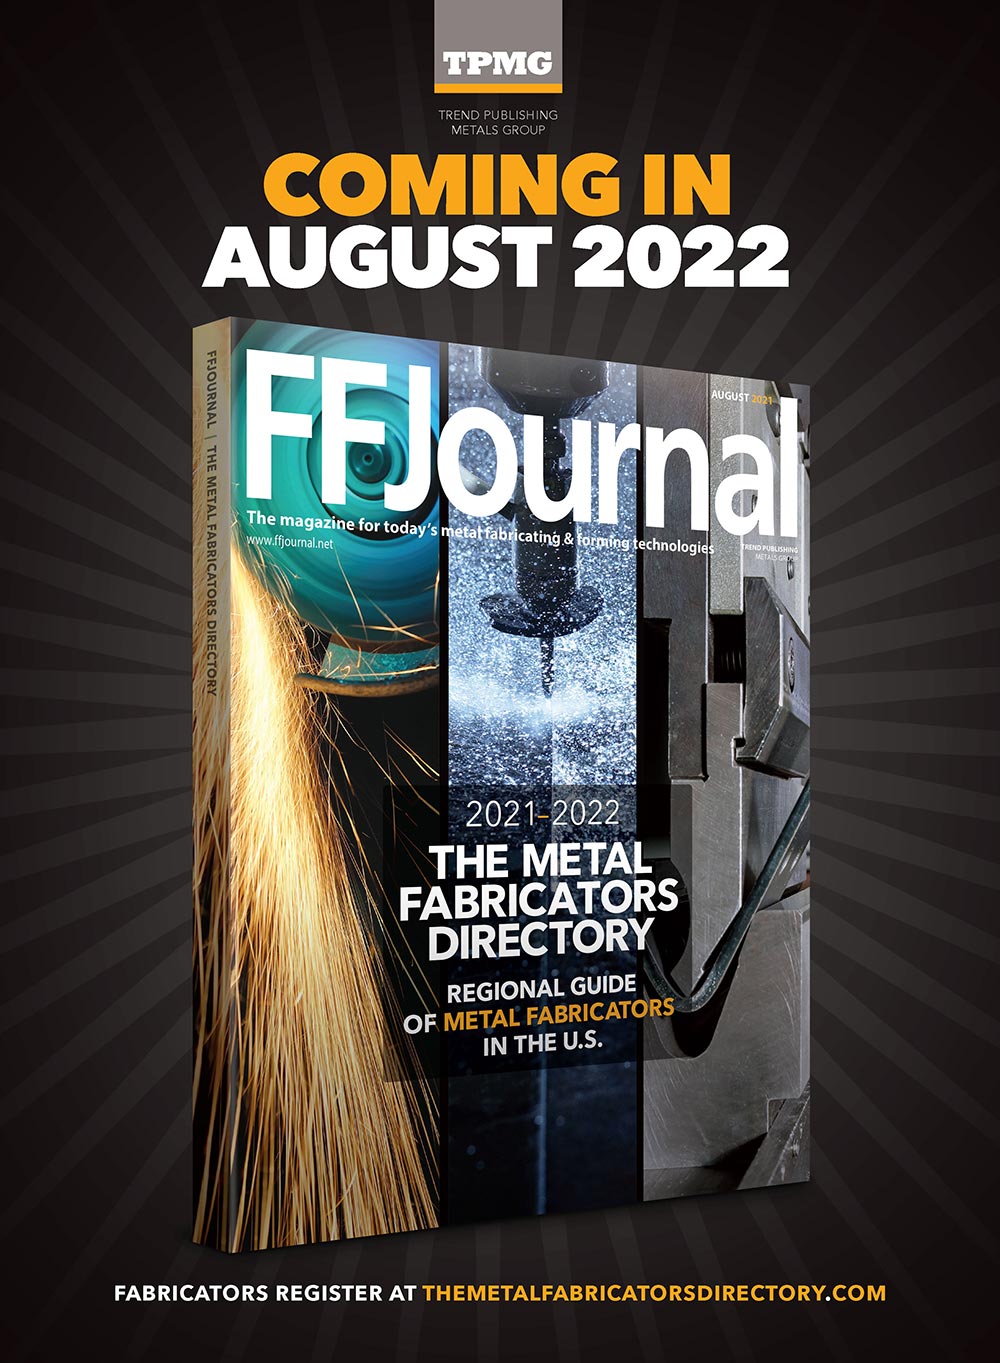 Trend Publishing Metals Group 2021-2022 Metal Fabricators Directory Advertisement